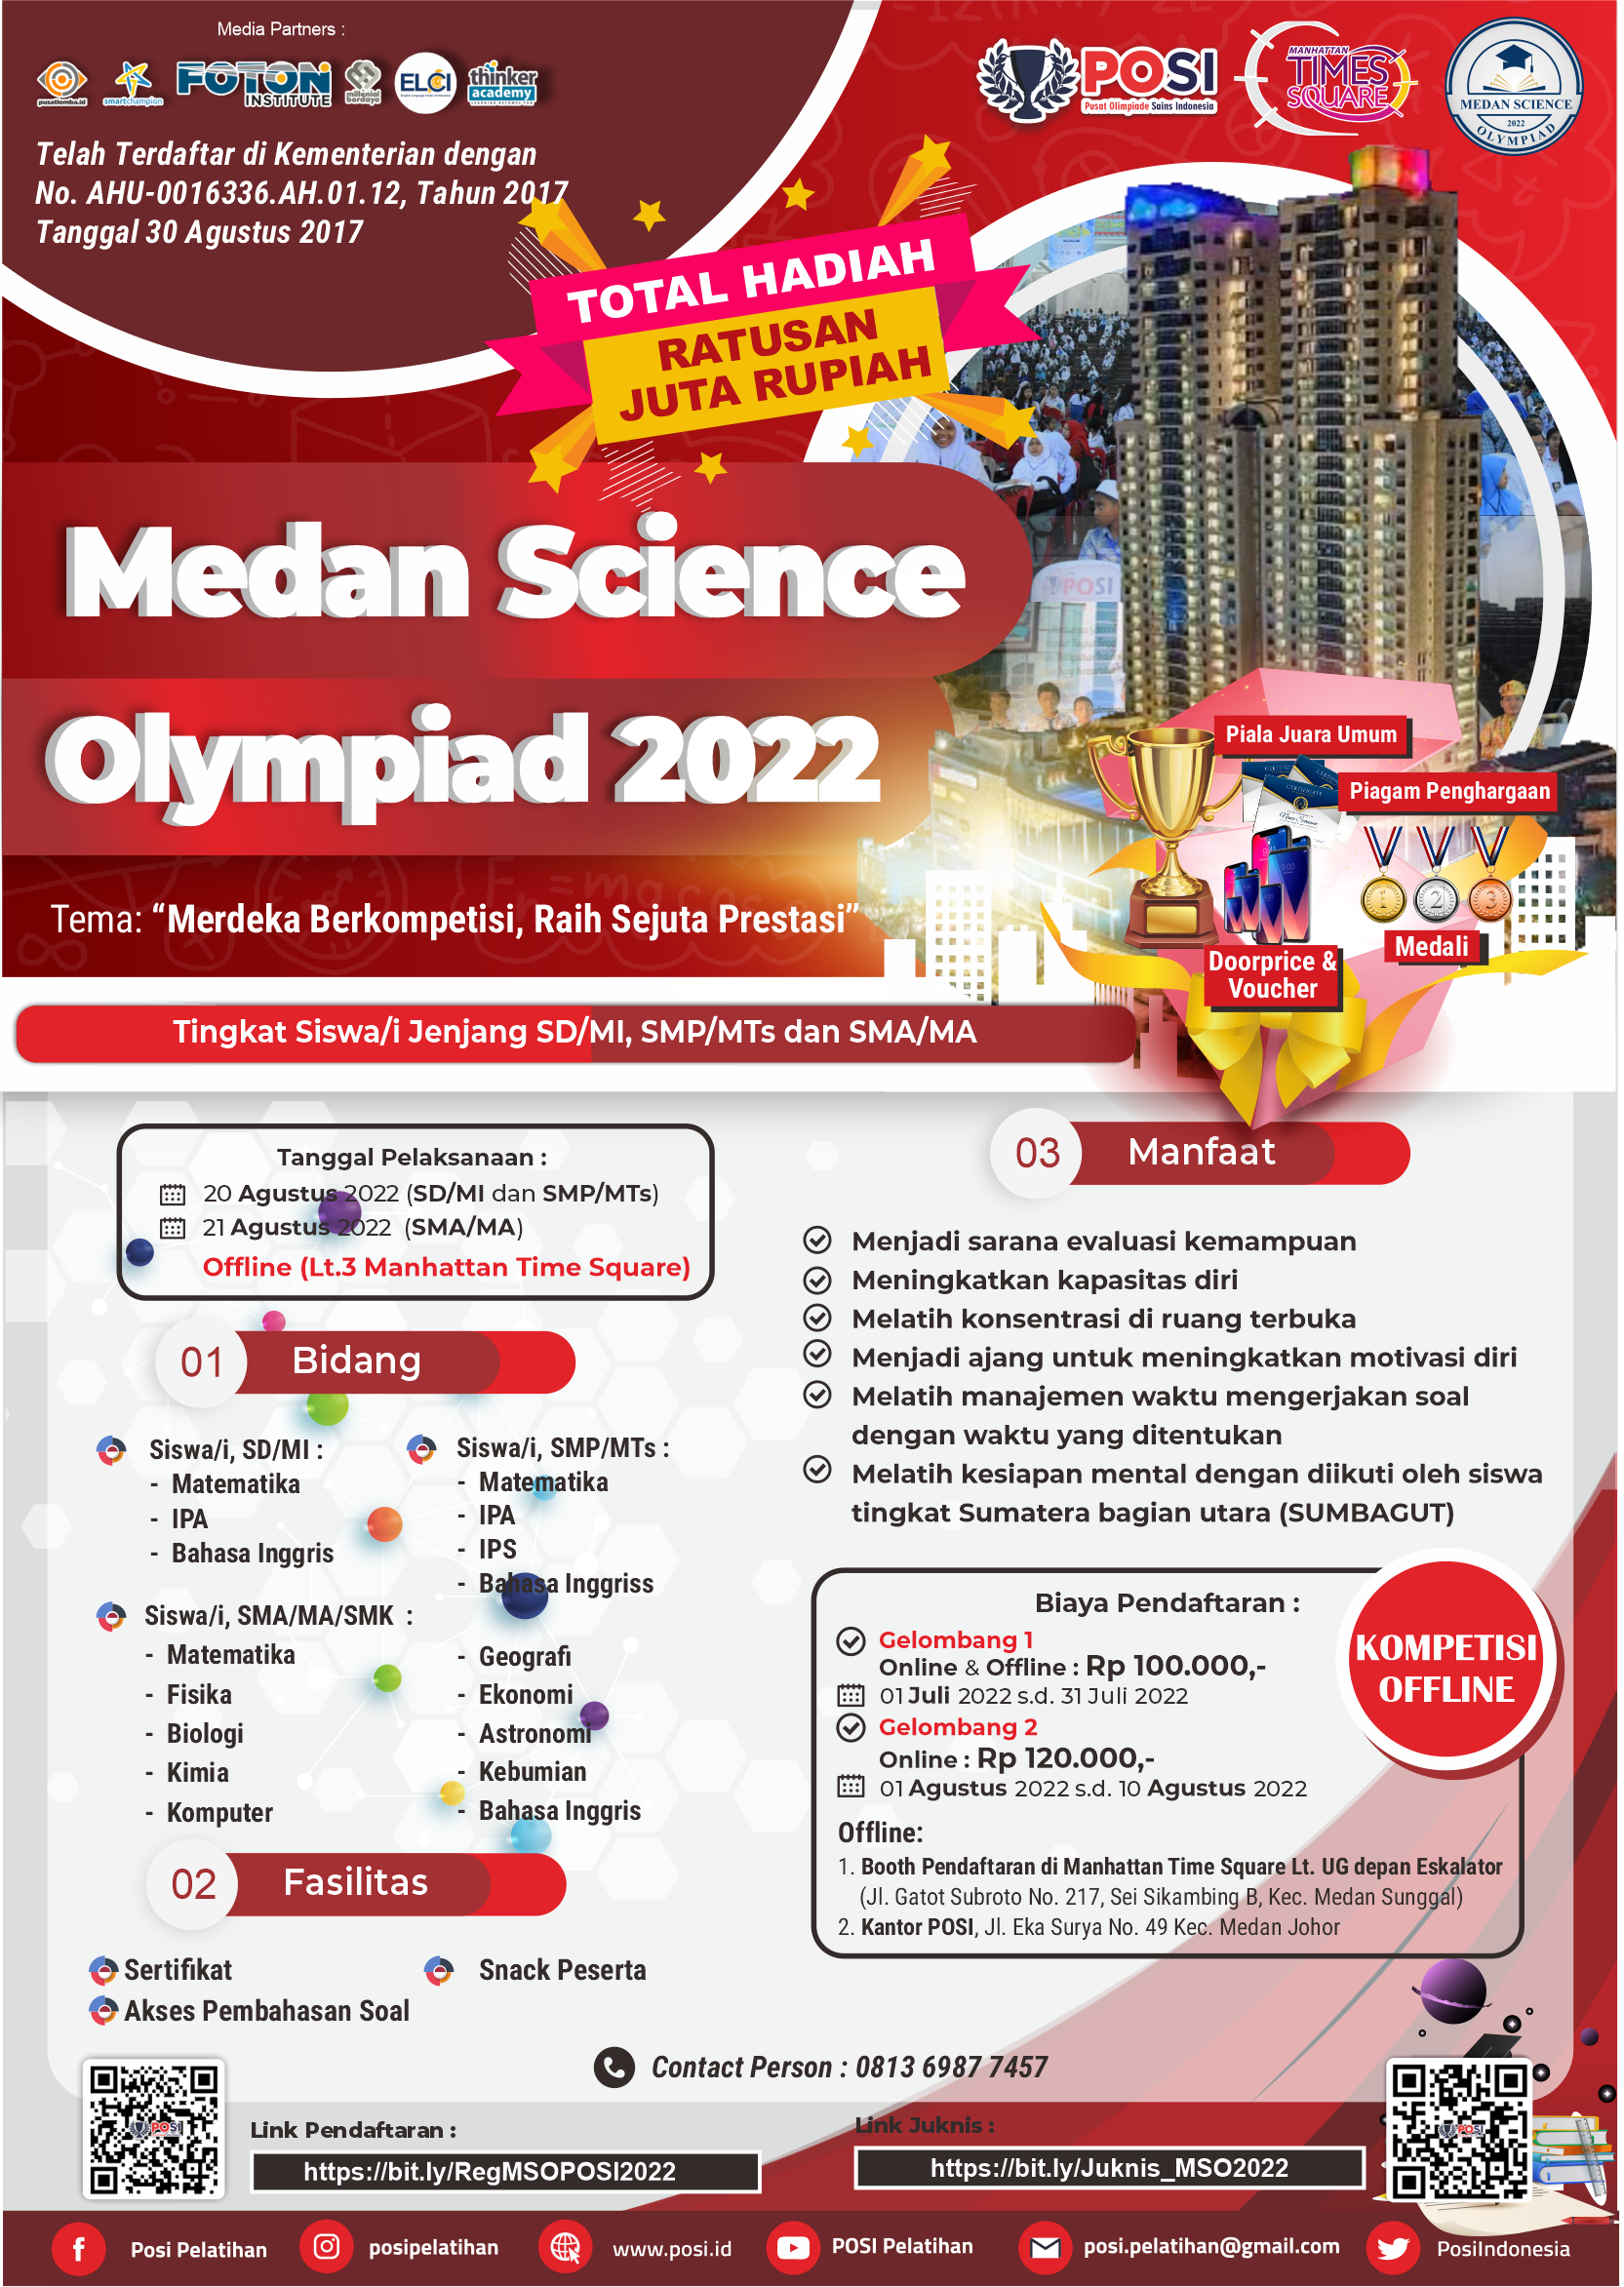 Pengumuman MSO (Medan Science Olimpiad) 2022